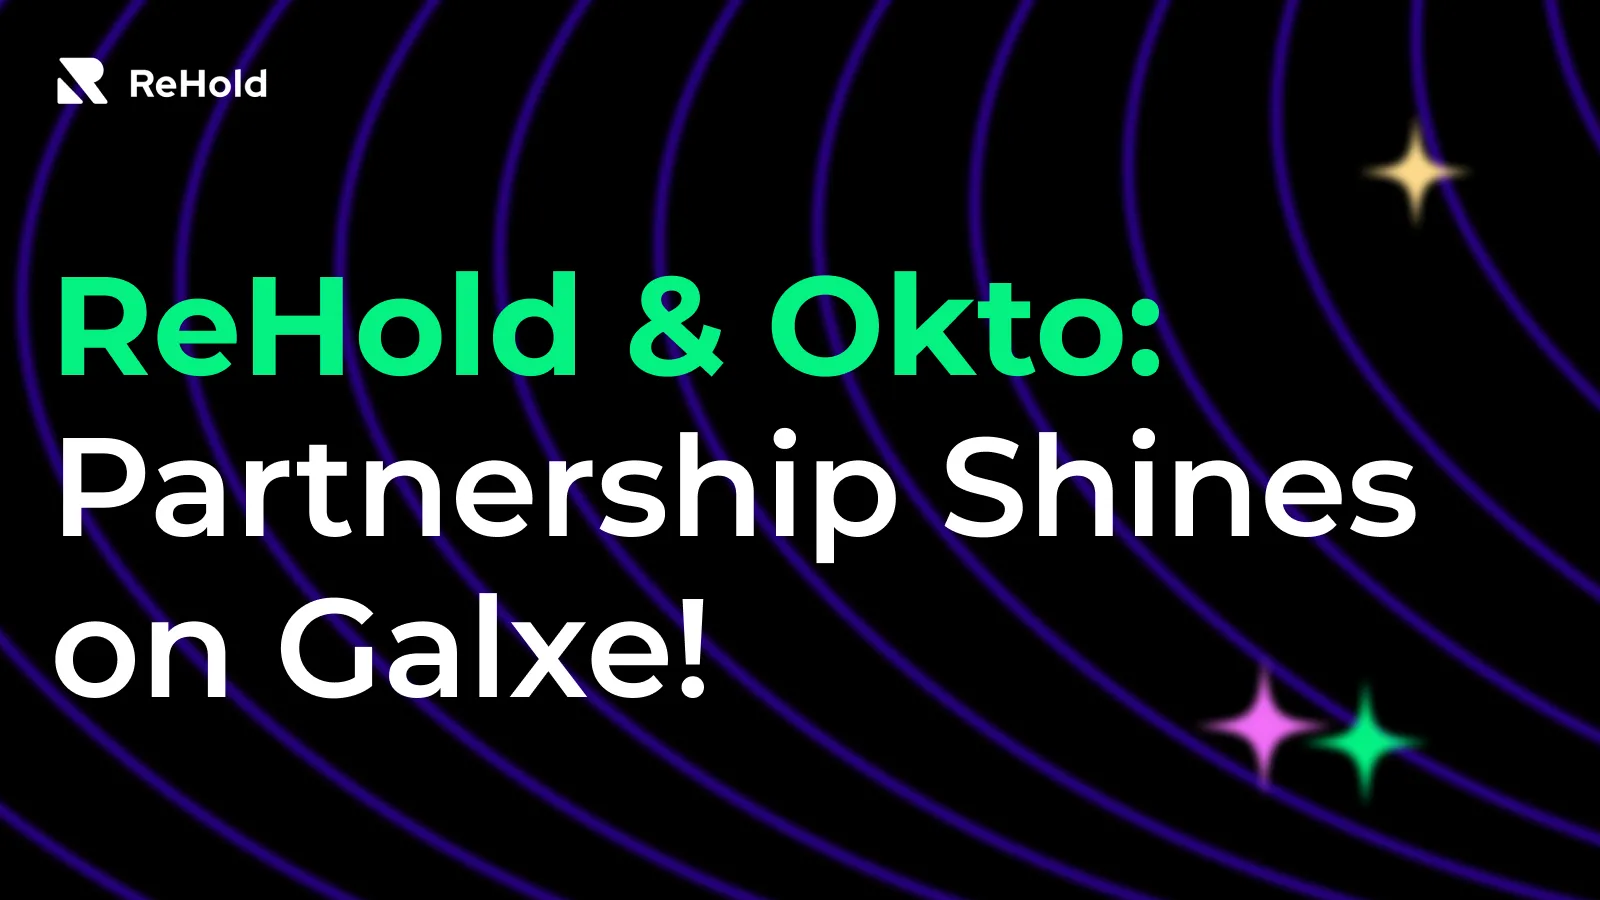 ReHold & Okto: Partnership Shines on Galxe!